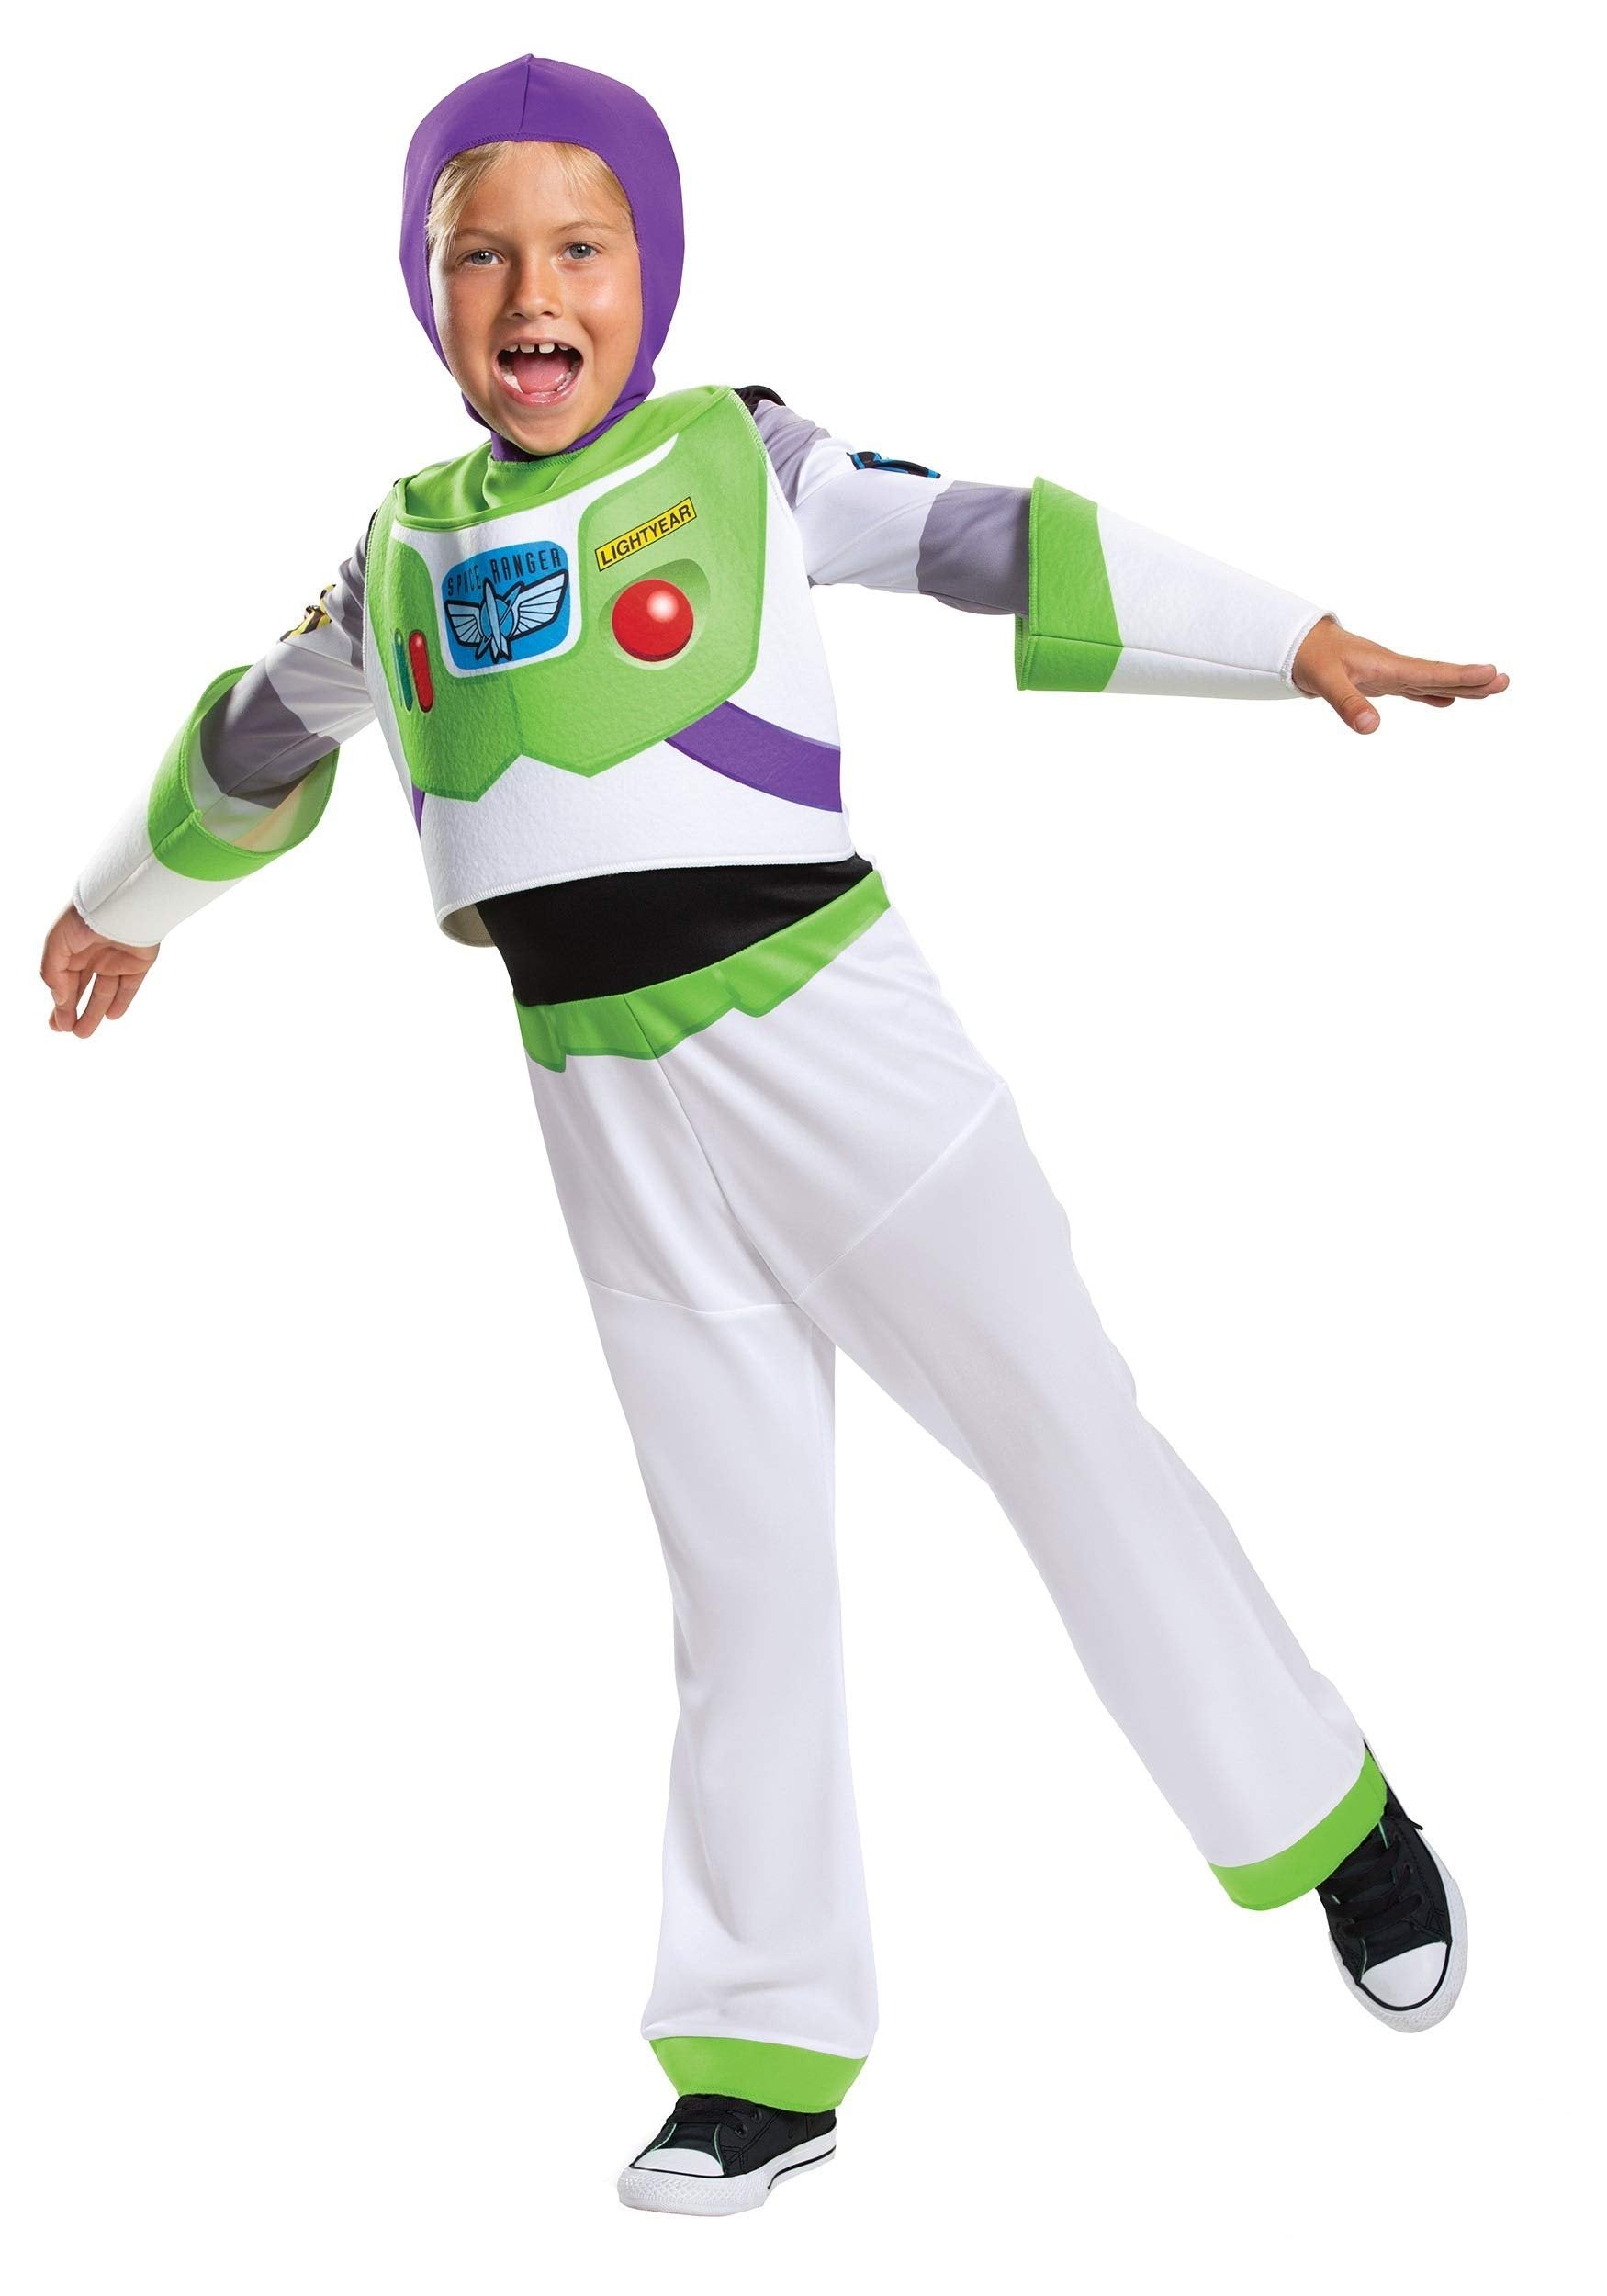 Buzz Lightyear Costume Toy Story 4 Child | Size S (4-6) White | Free Ship & Returns